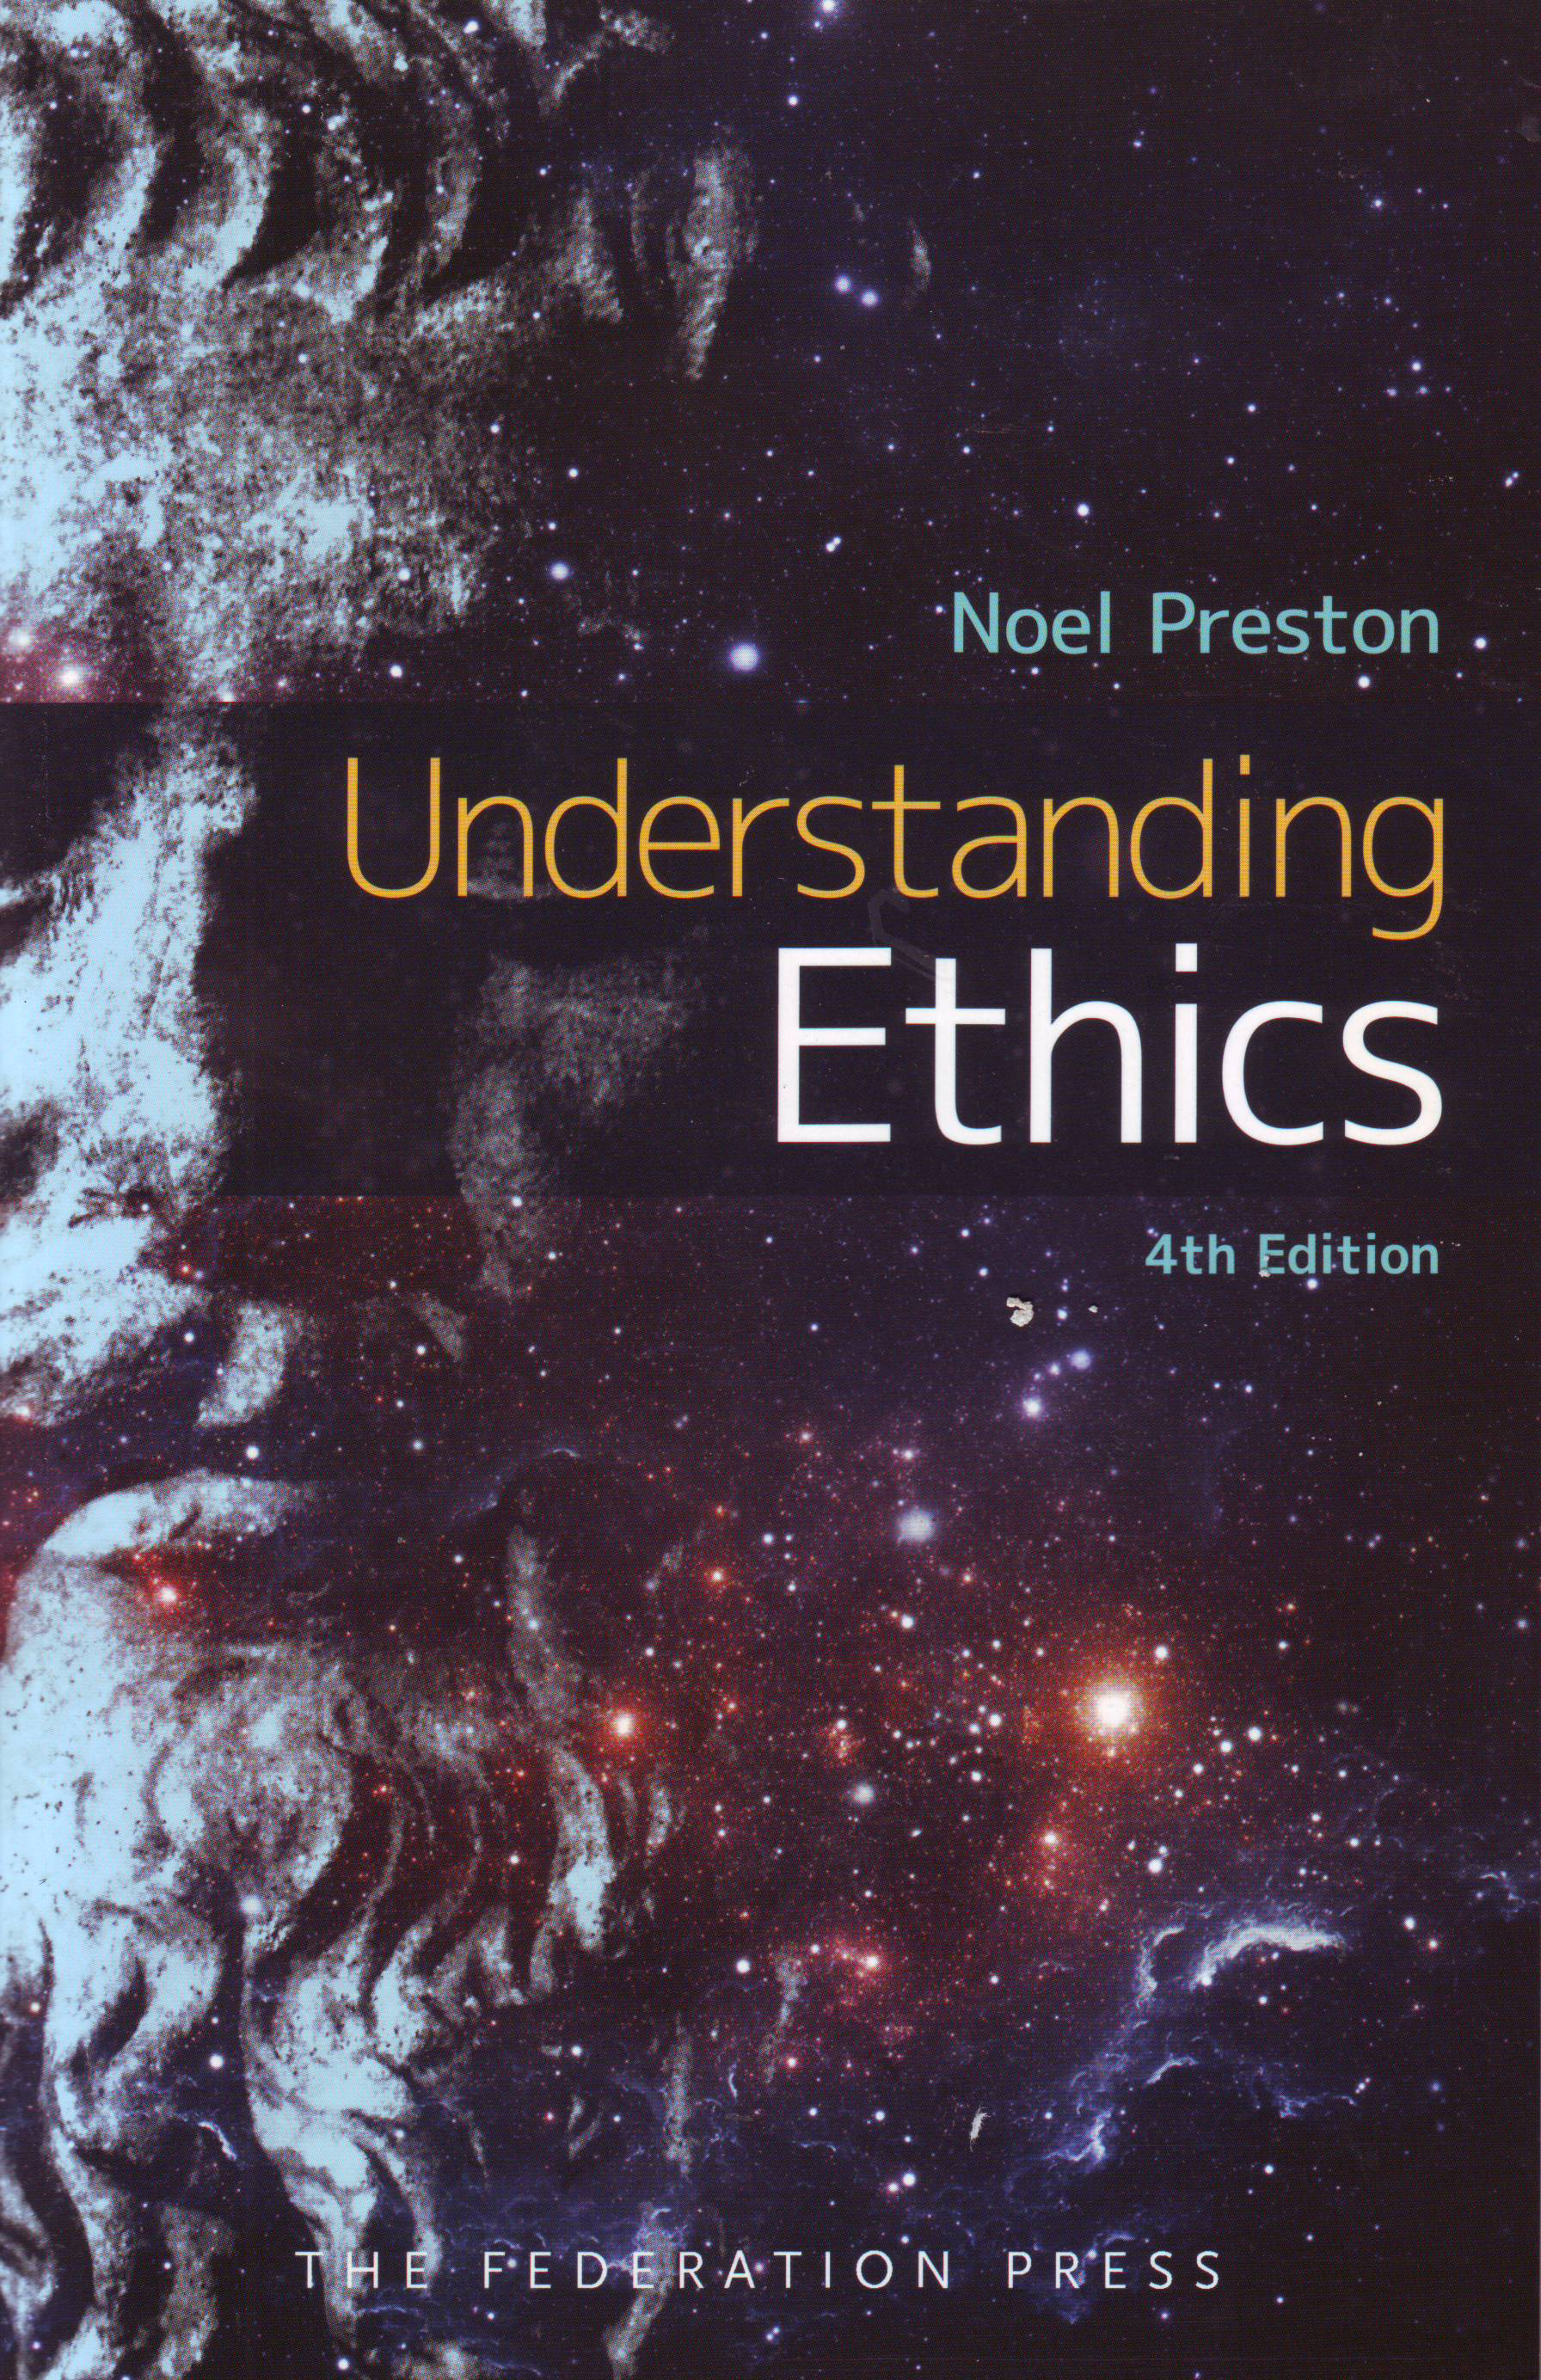 Understanding Ethics e4